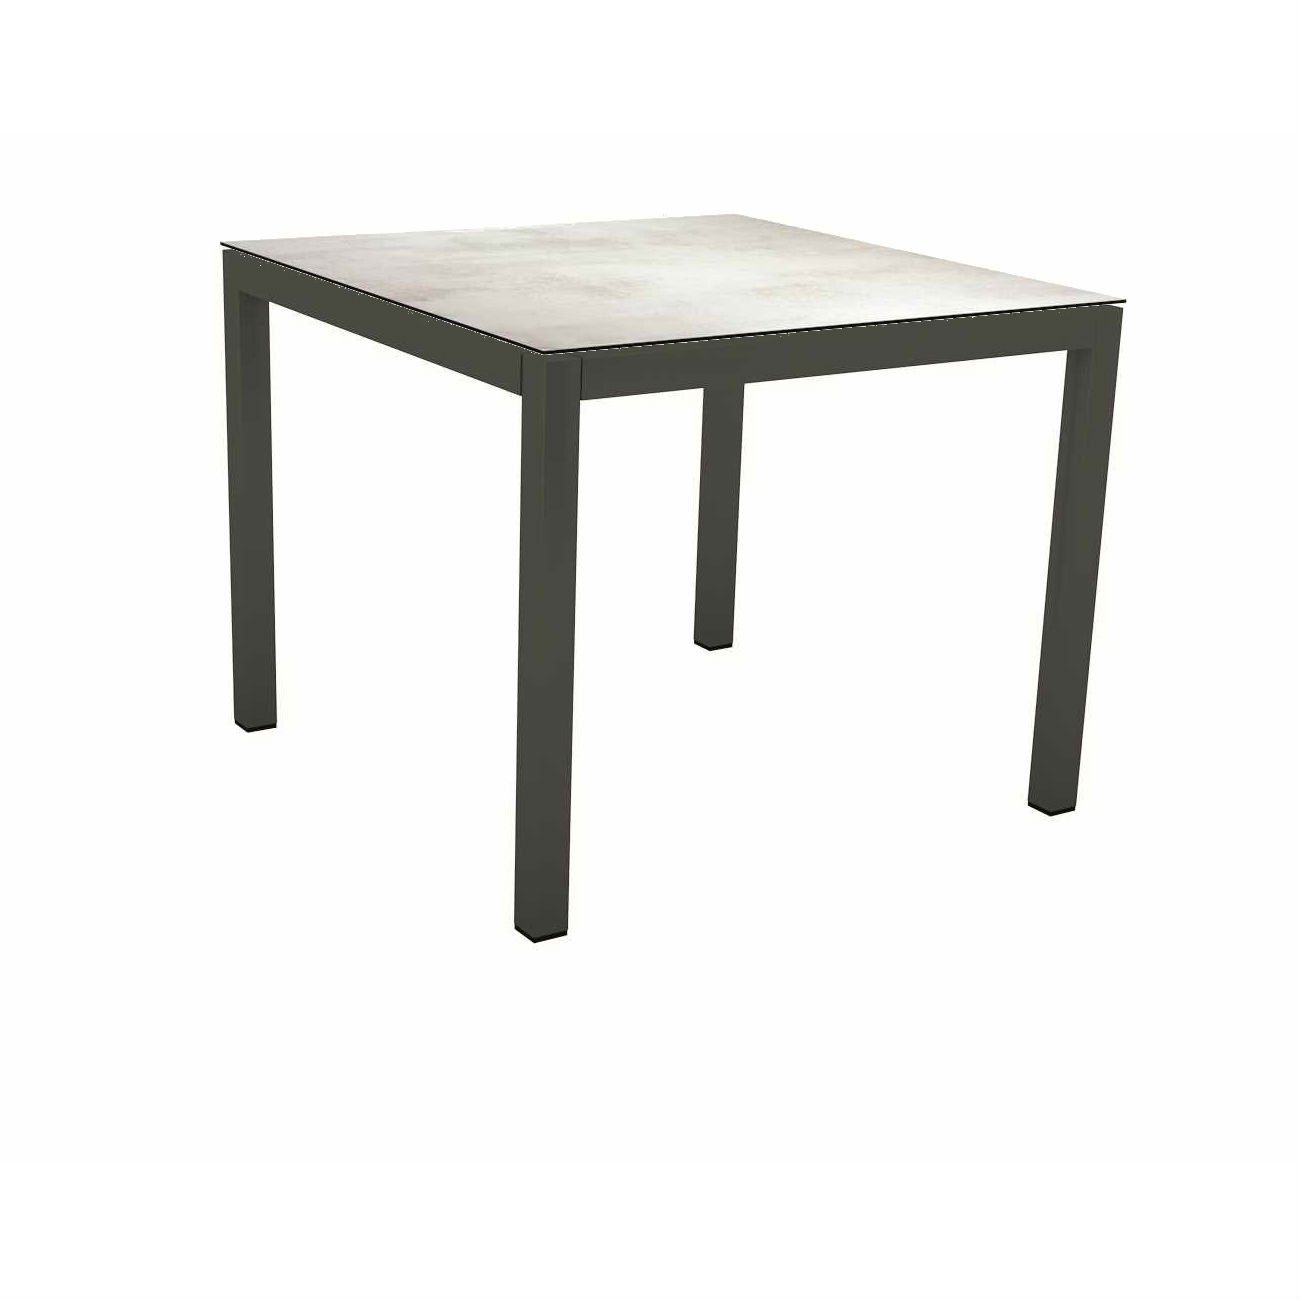 Stern Tischsystem Gartentisch, Gestell Aluminium anthrazit, Tischplatte HPL Zement hell, Maße: 90x90 cm